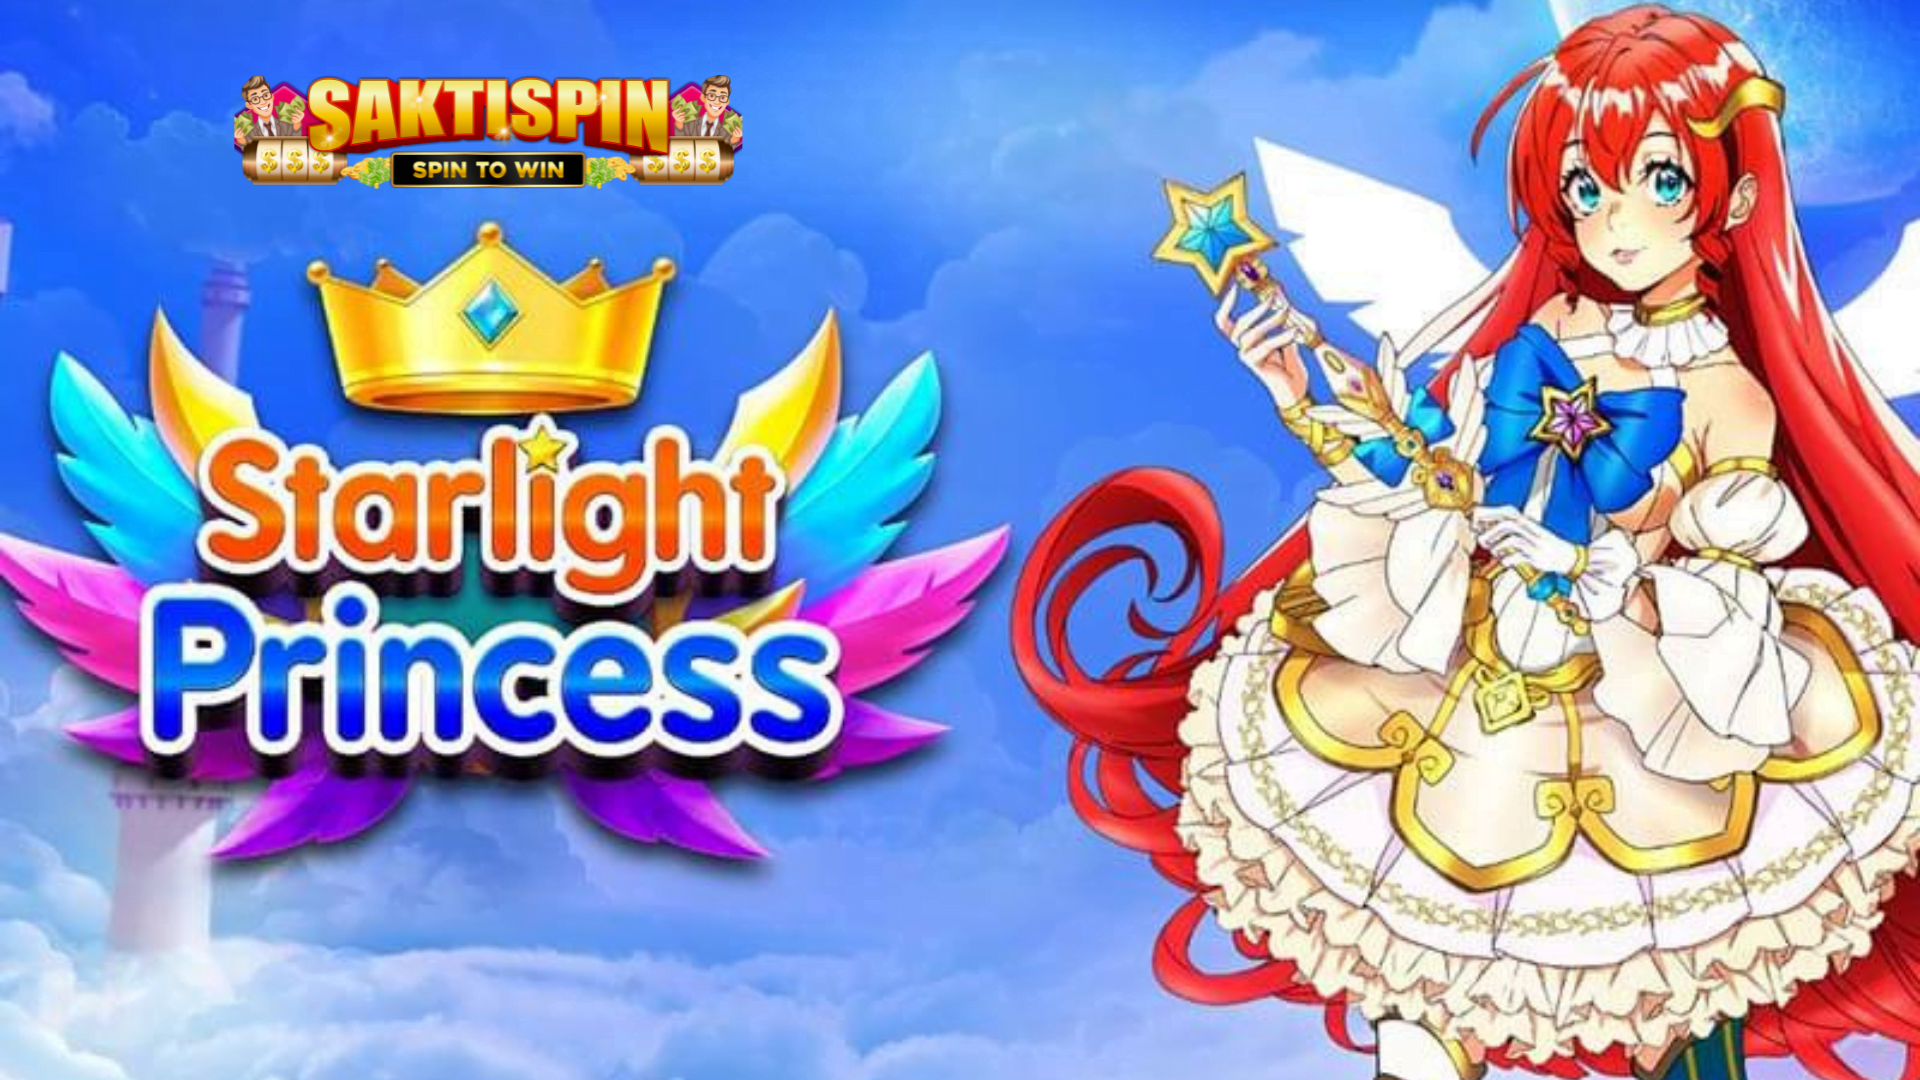 Starlight Princess di Saktispin